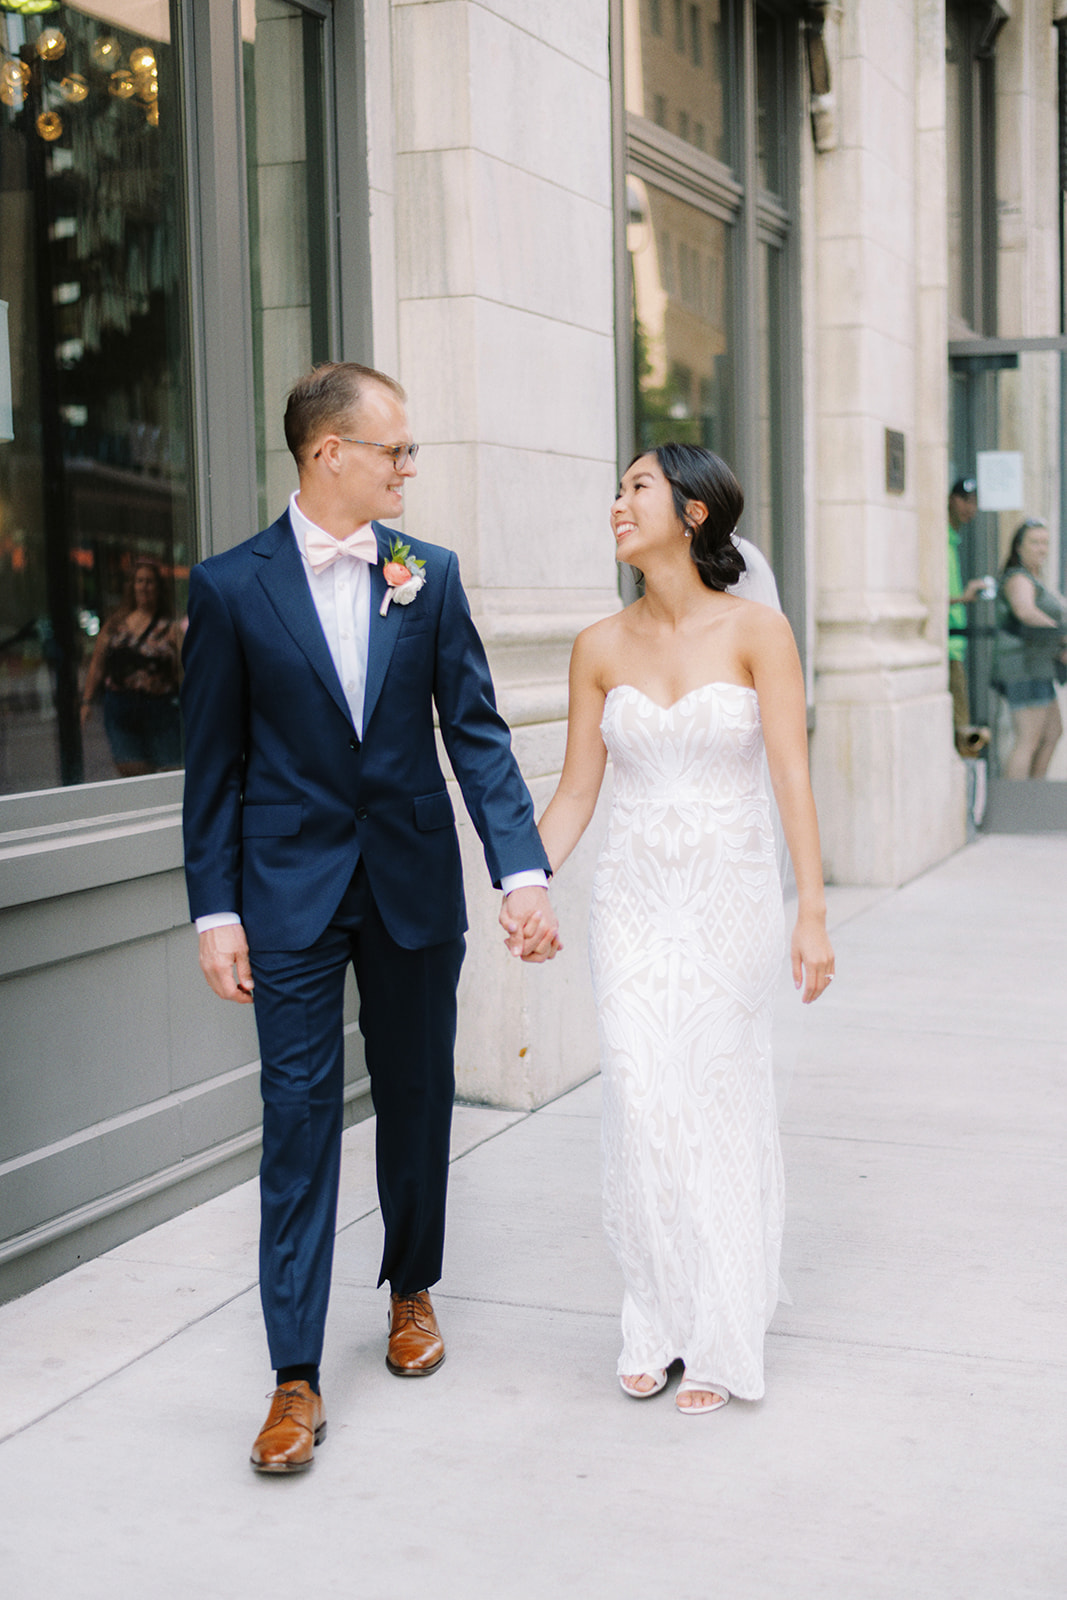 Downtown Cincinnati wedding photography